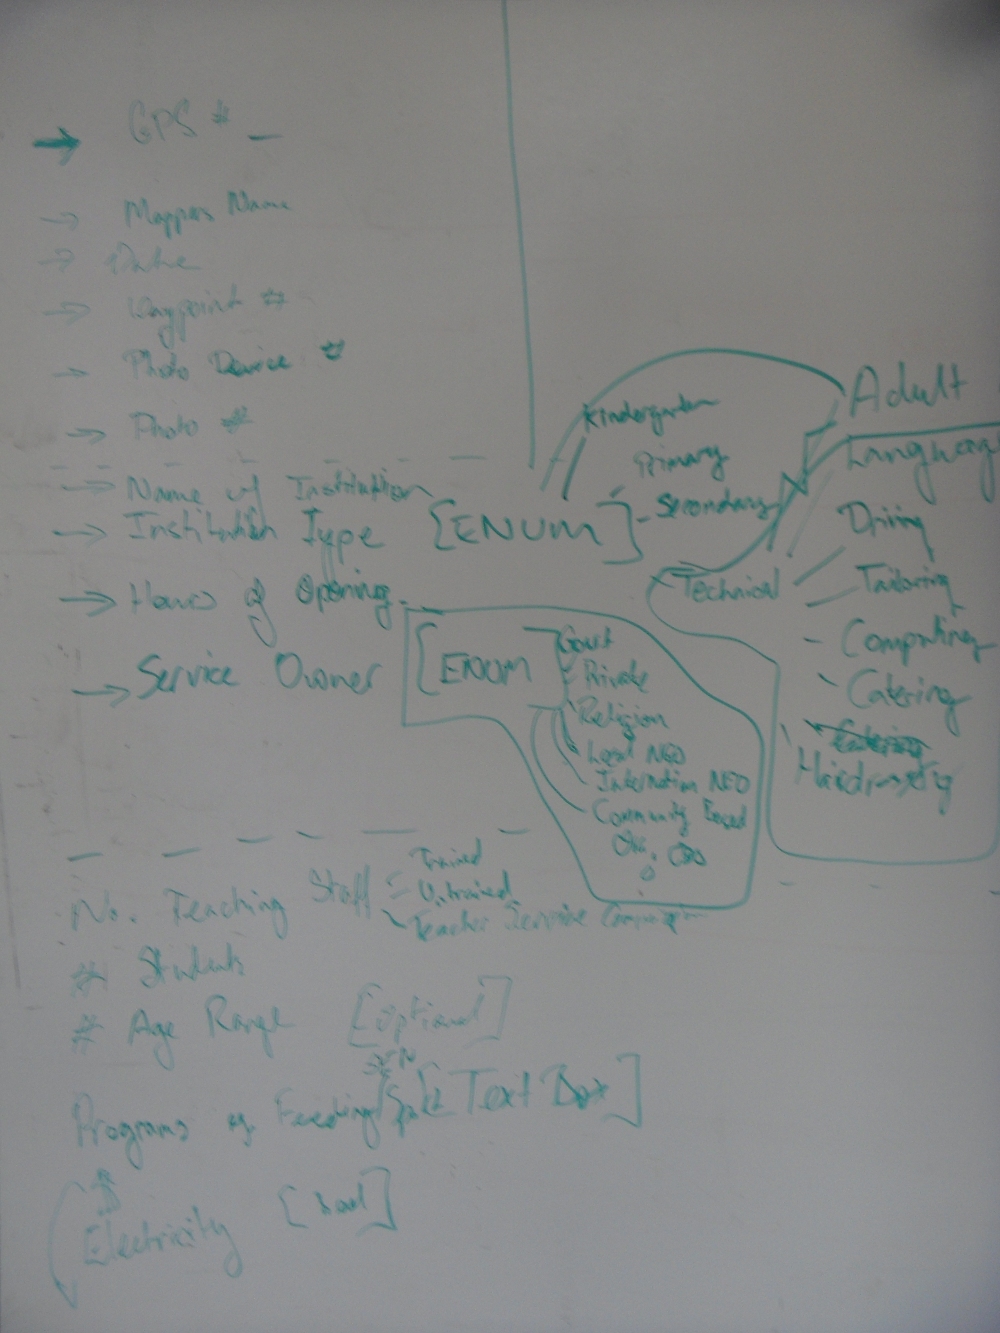 Whiteboard brainstorm